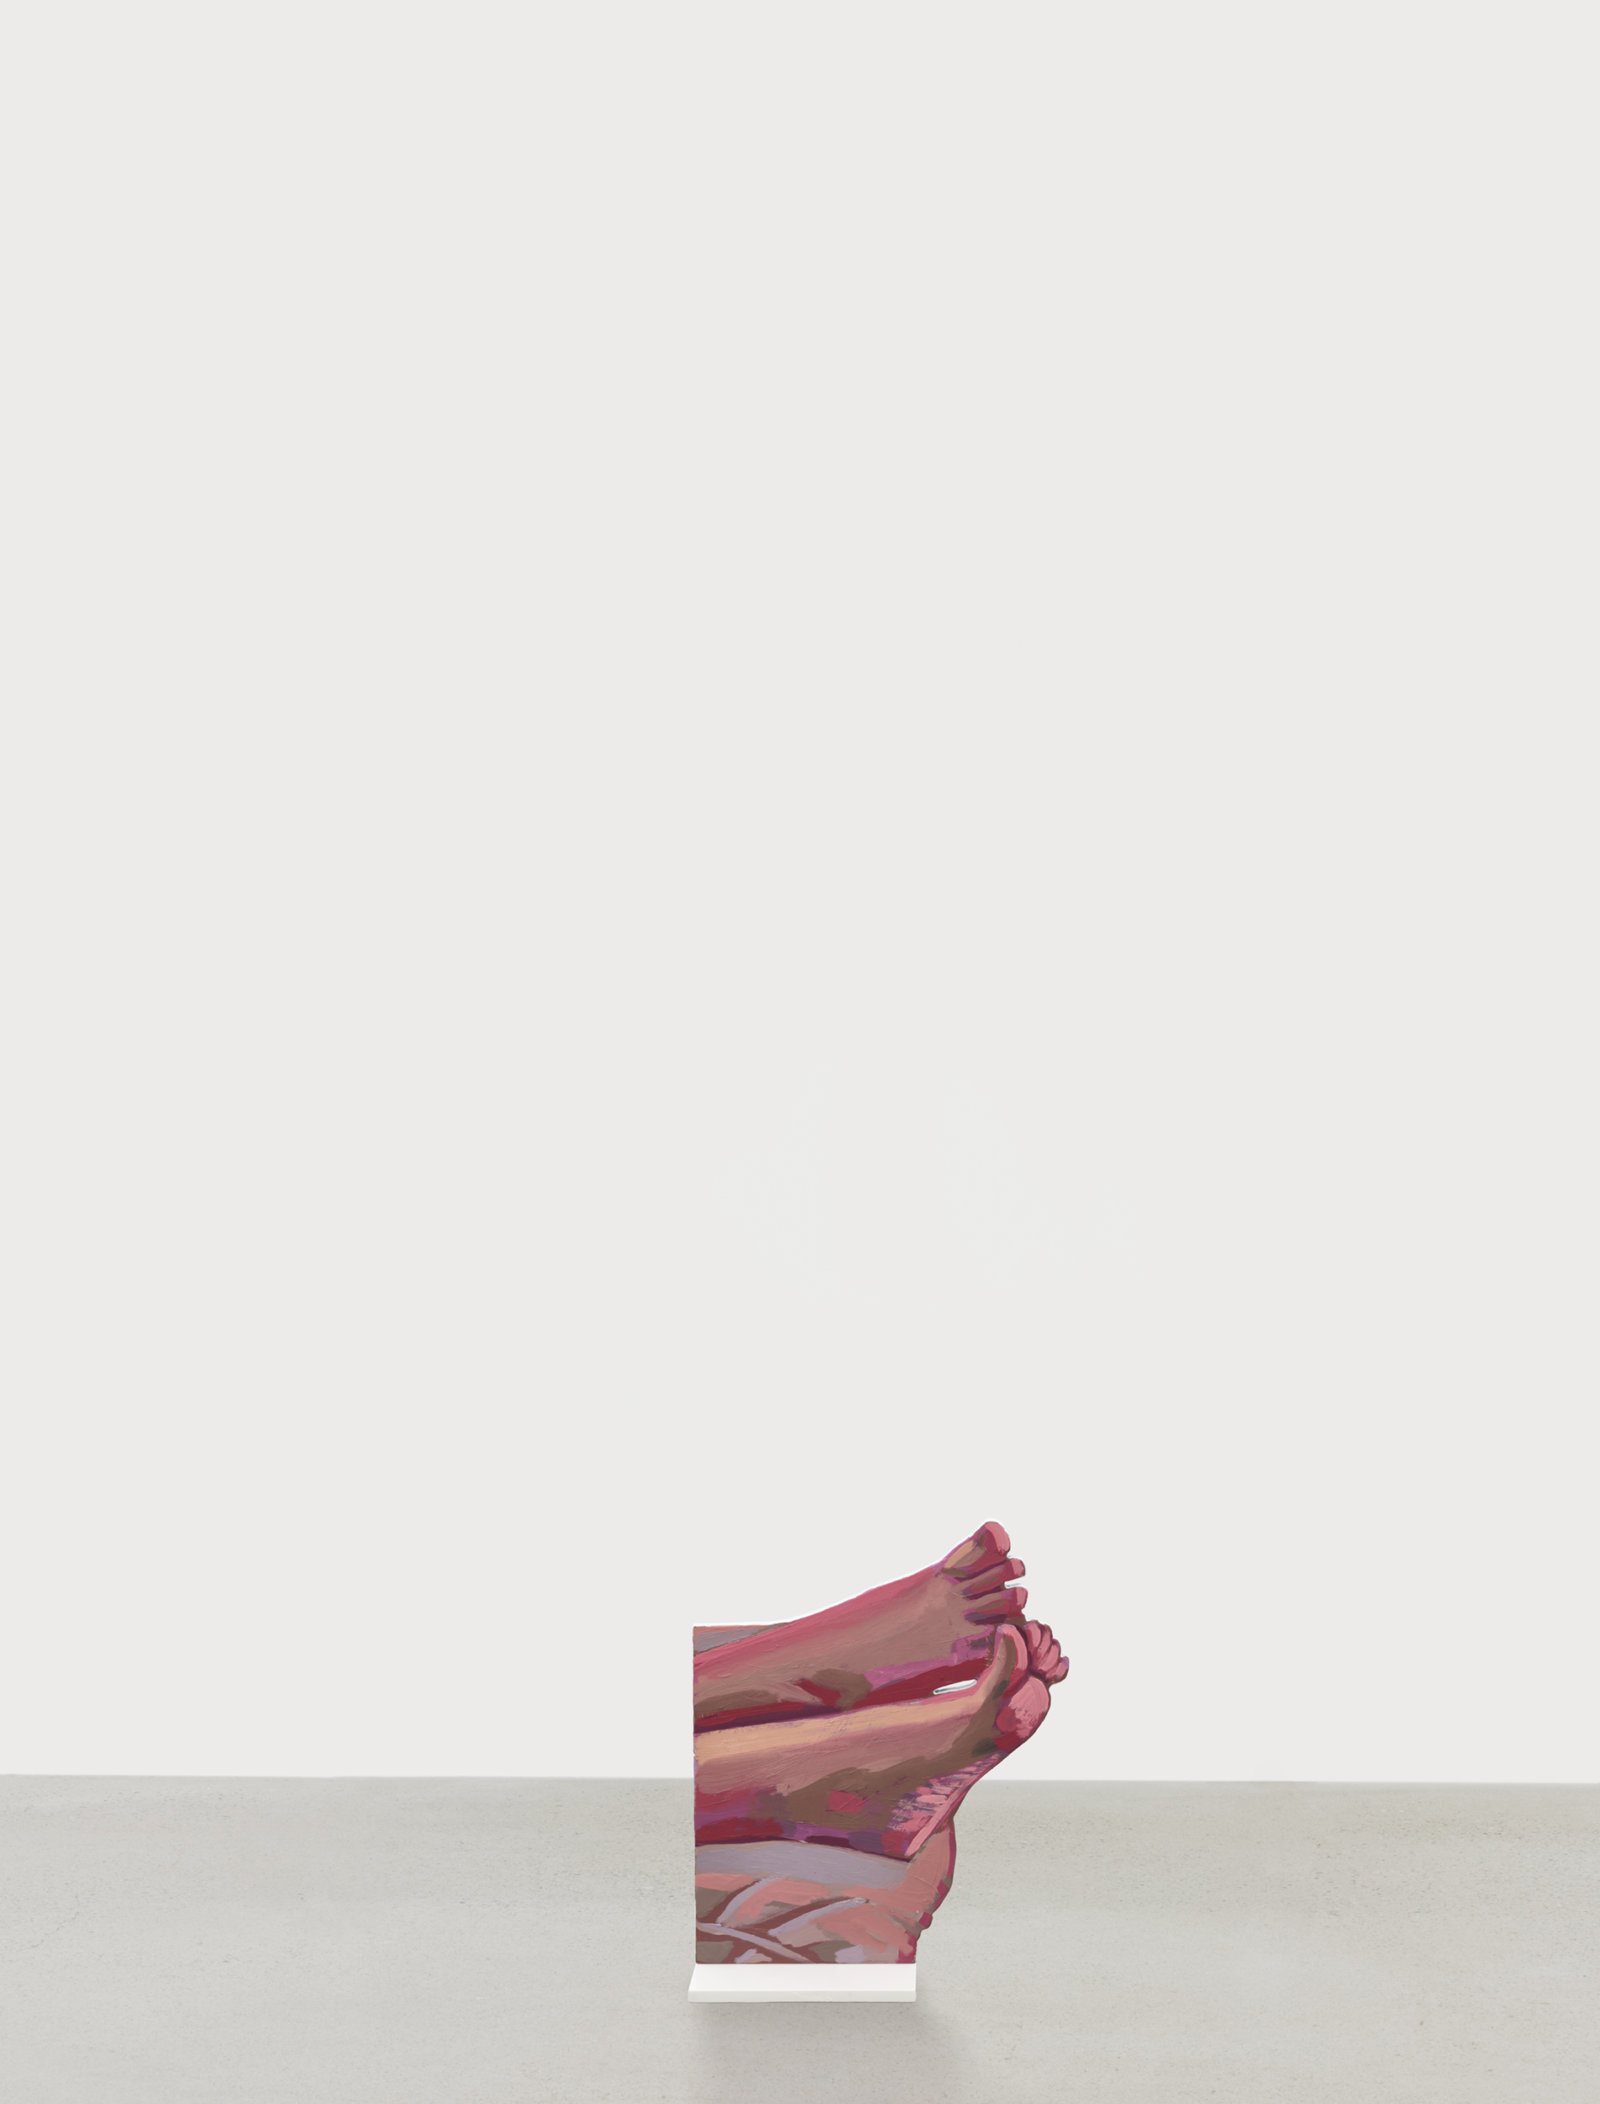 Damian Moppett, Pink Feet, 2023, oil and enamel on aluminum, 13 x 10 in. (32 x 26 cm)